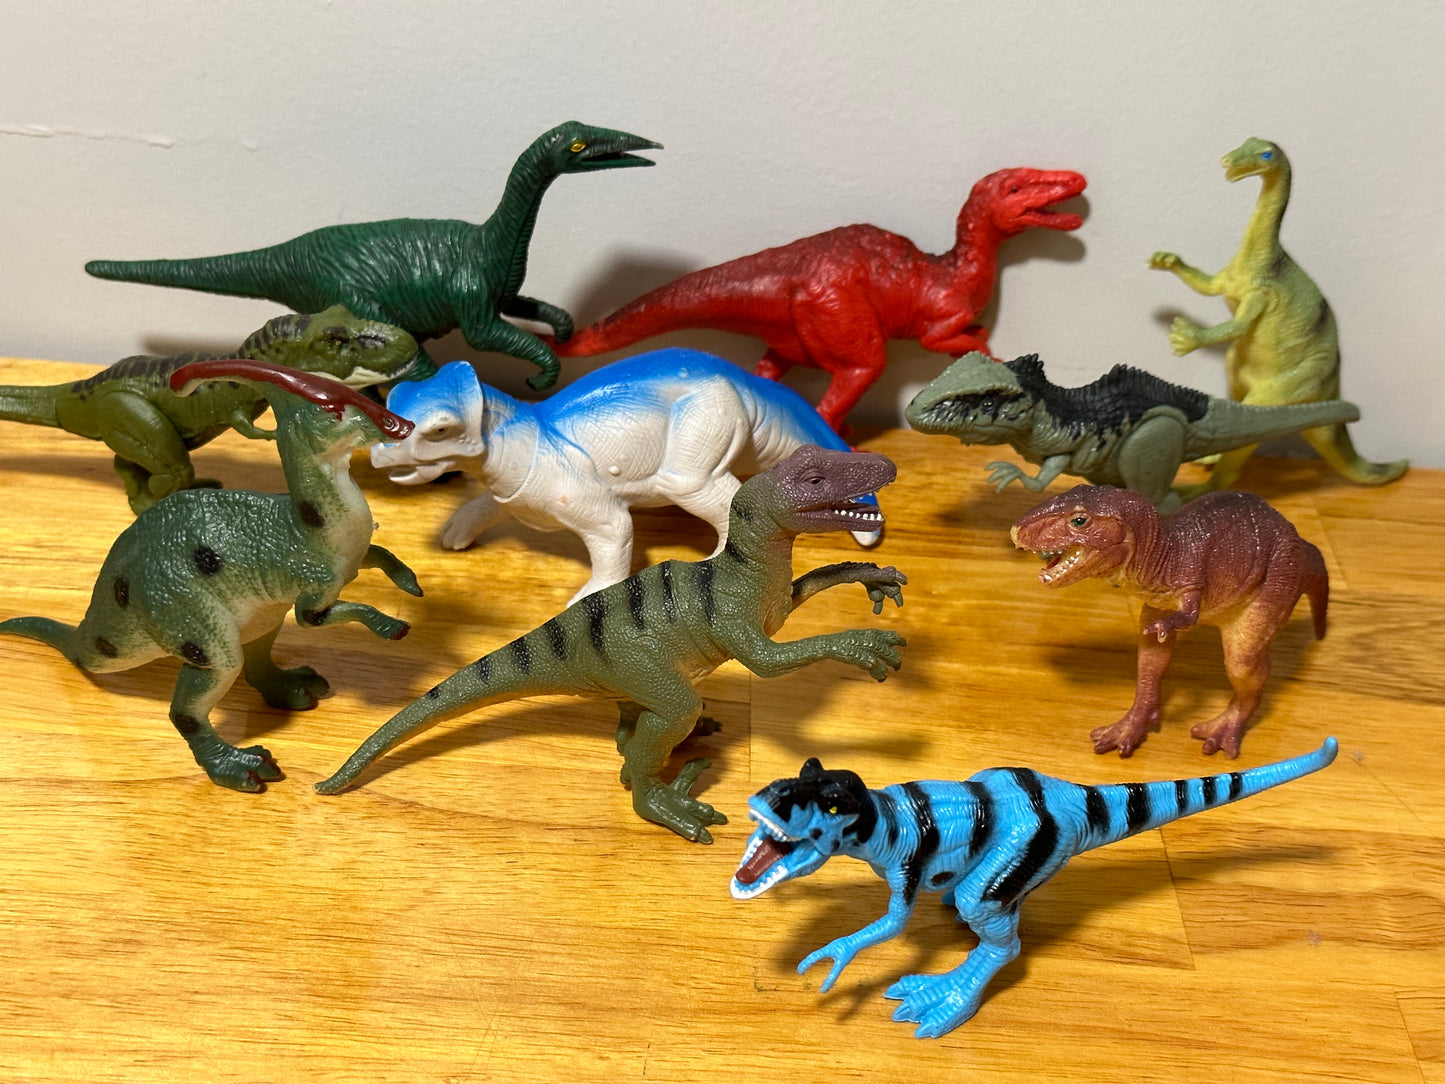 Lot of 10 4” Dinosaurs